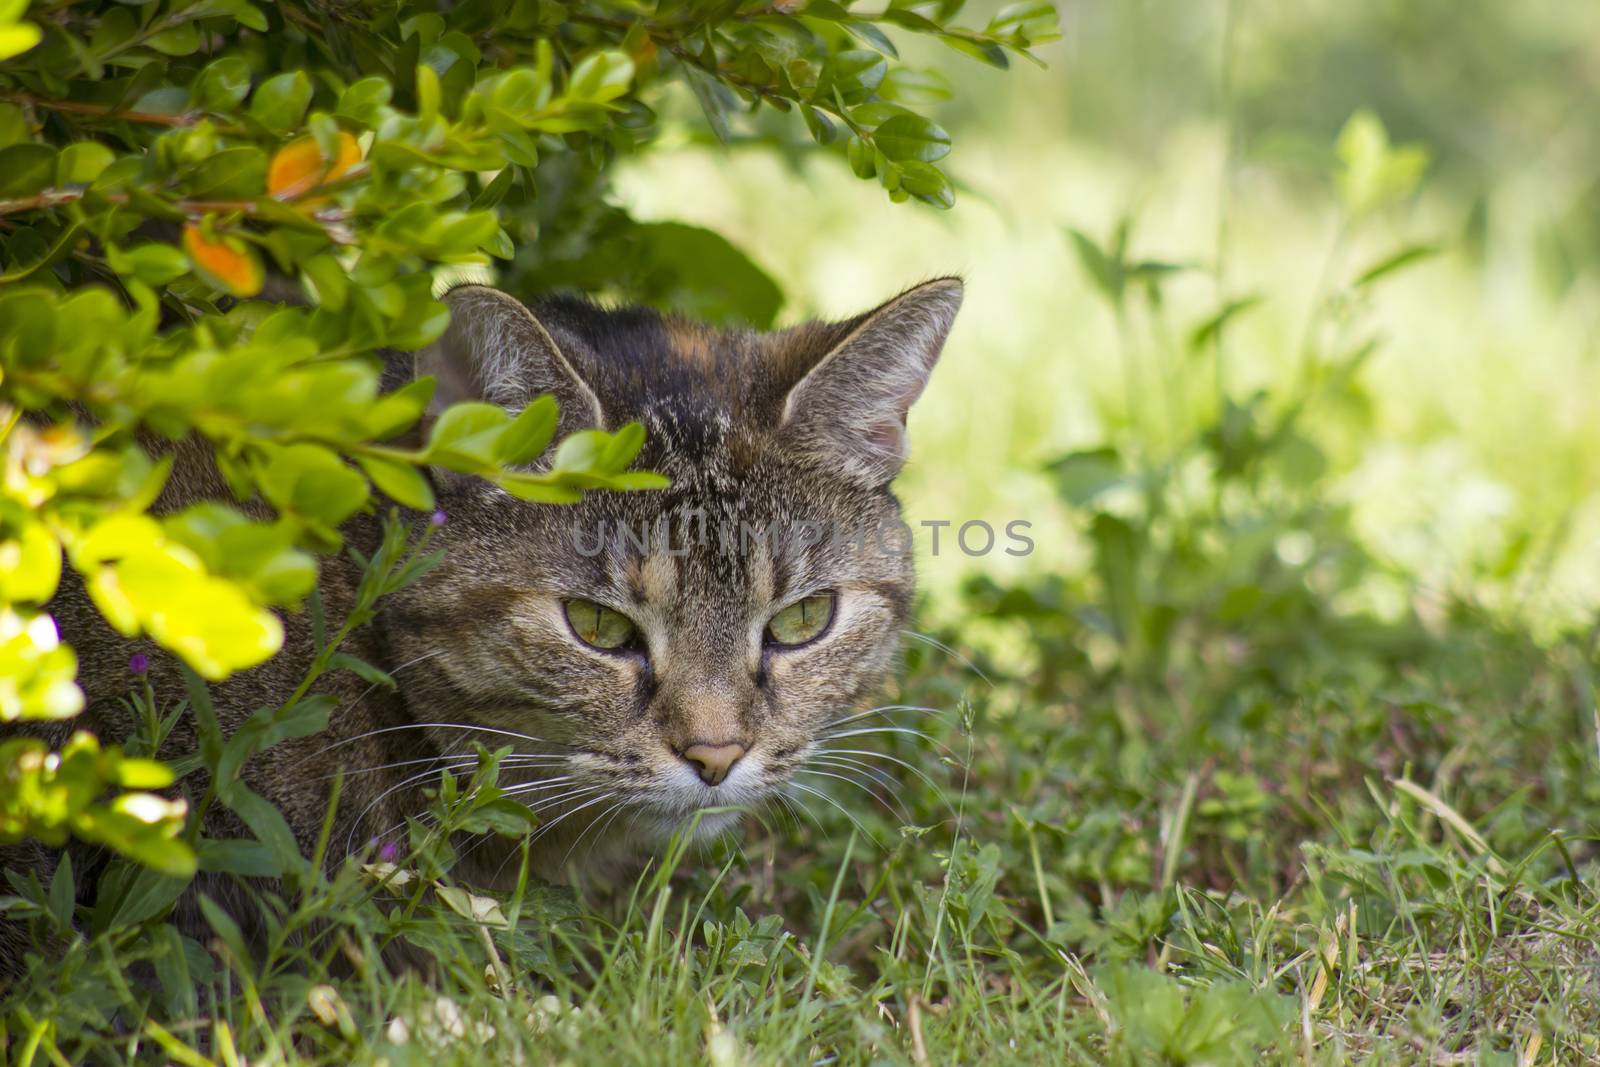 Cat resting in the garden by miradrozdowski